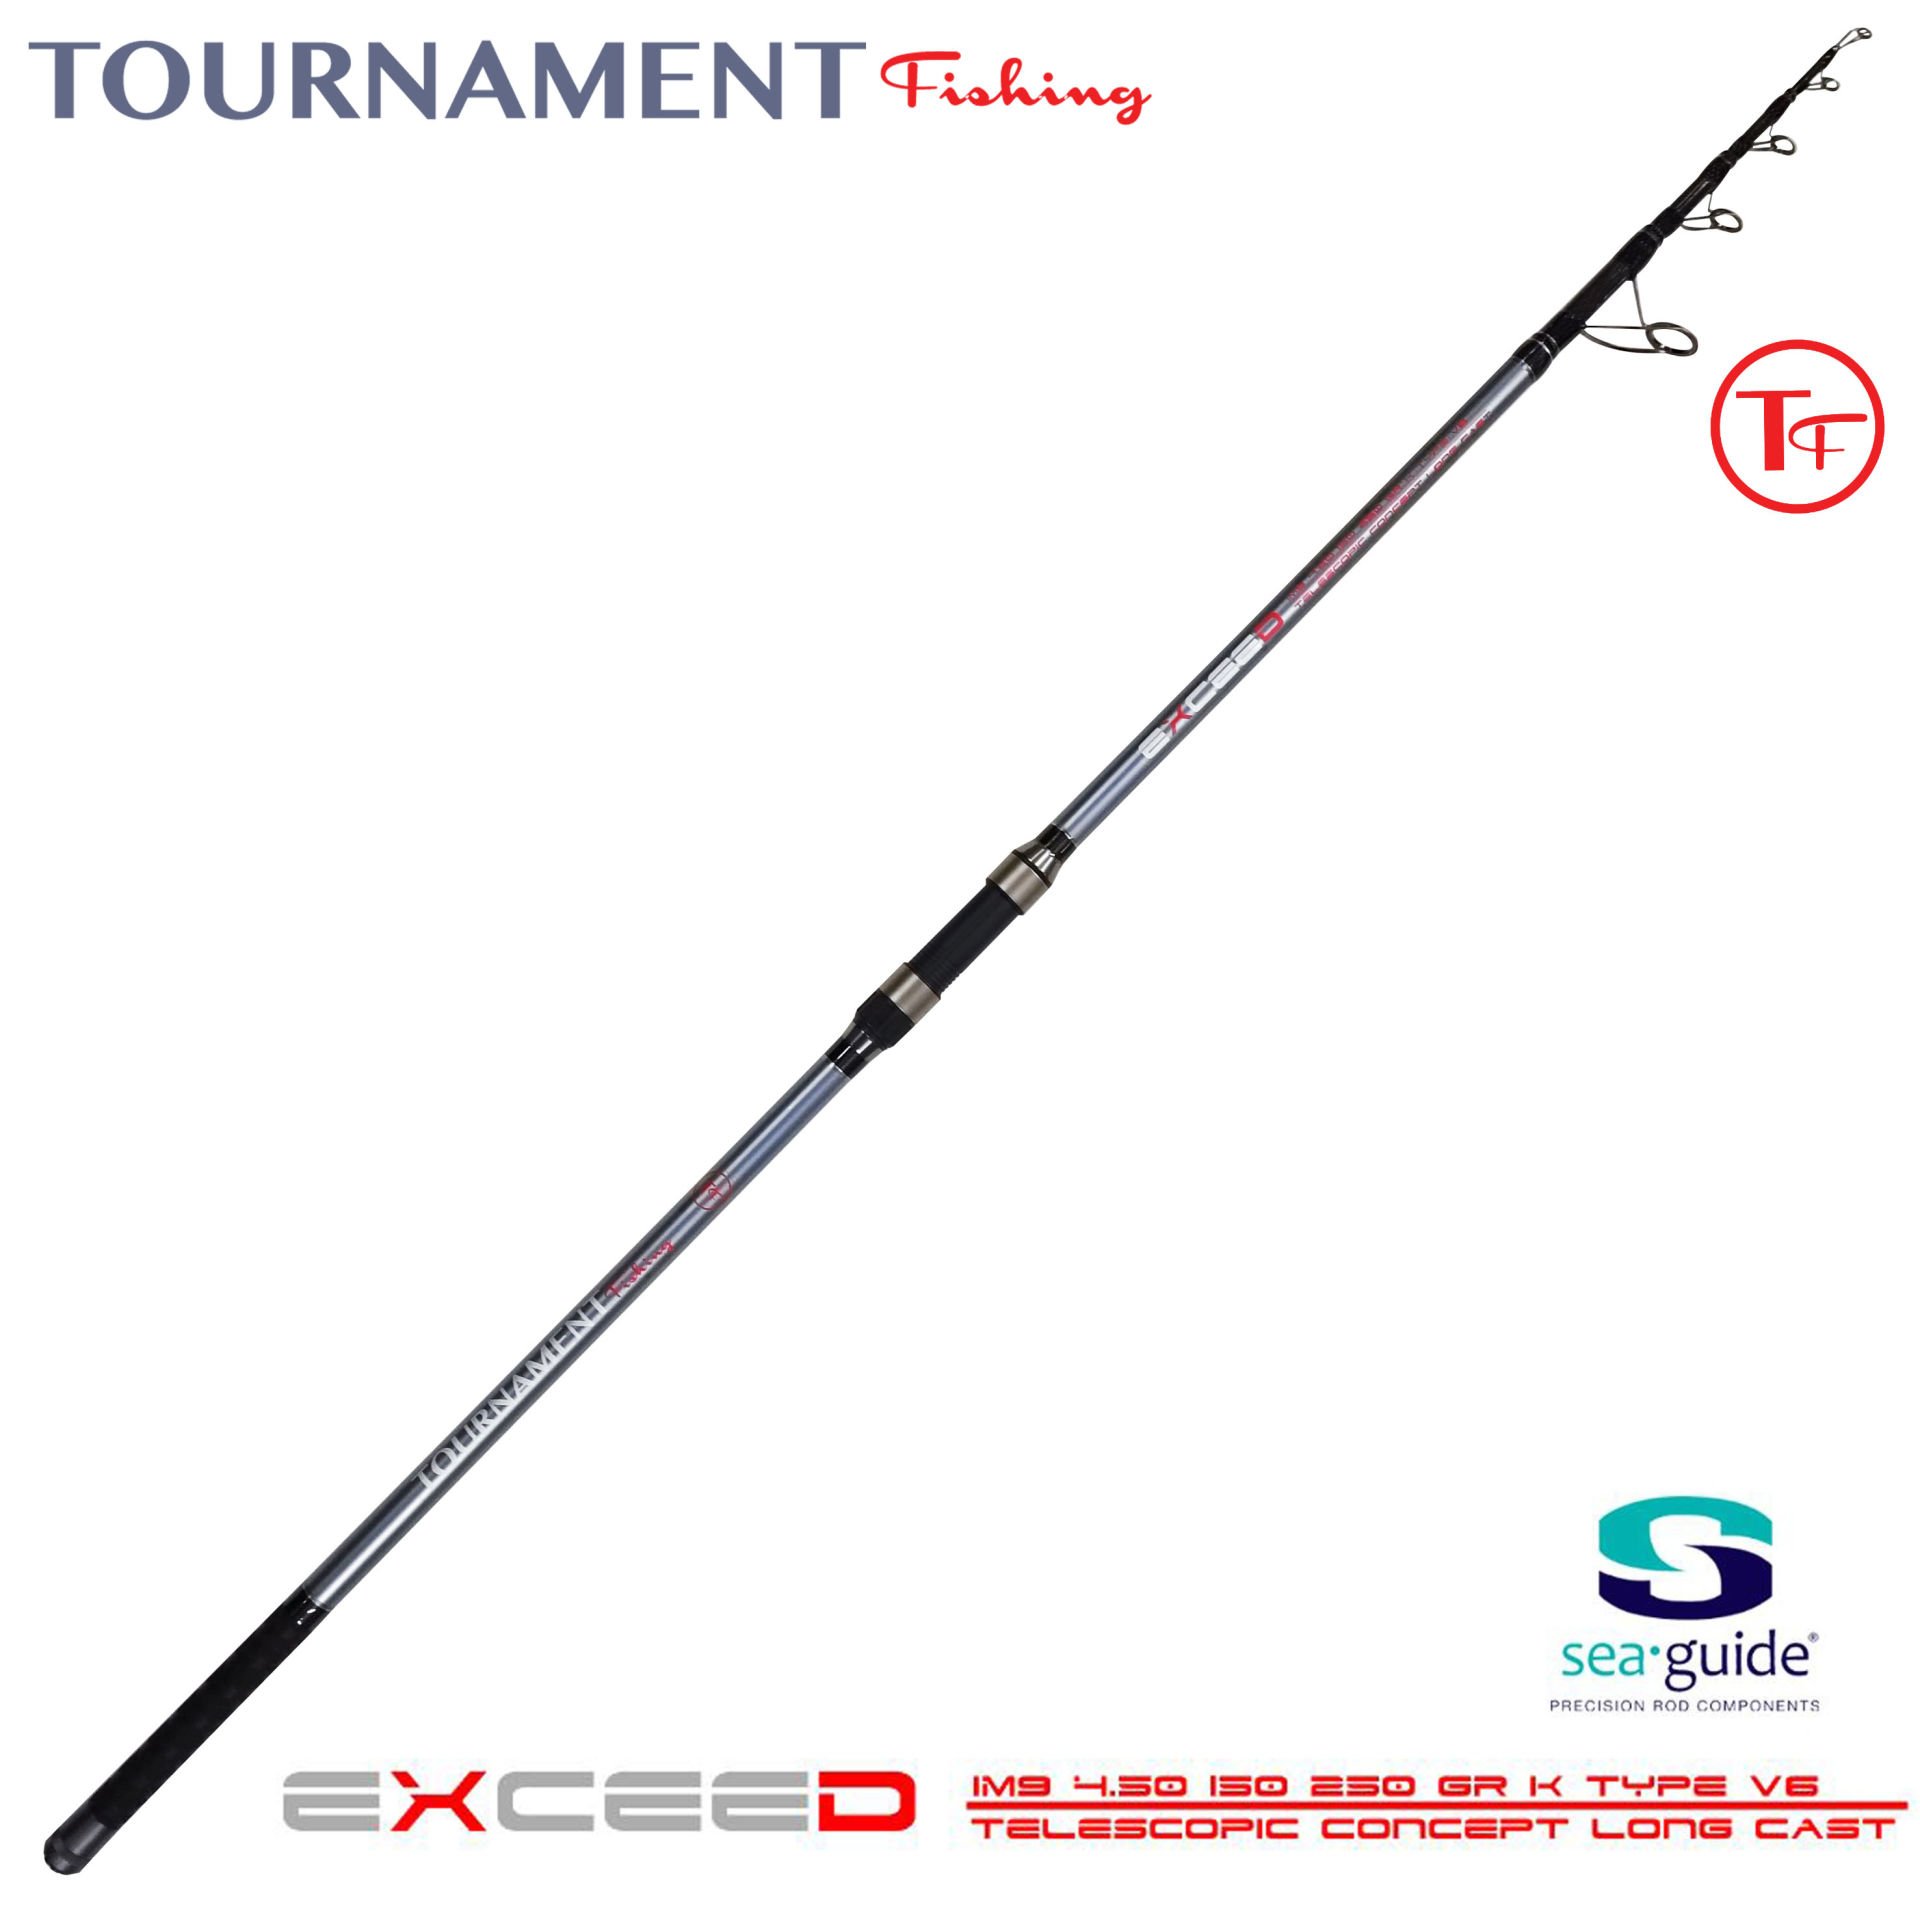 Tournament fishing Exceed 4.50Mt IM-9 Carbon K-Type Telescopic 100-250gr atarlı Surf Olta Kamışı